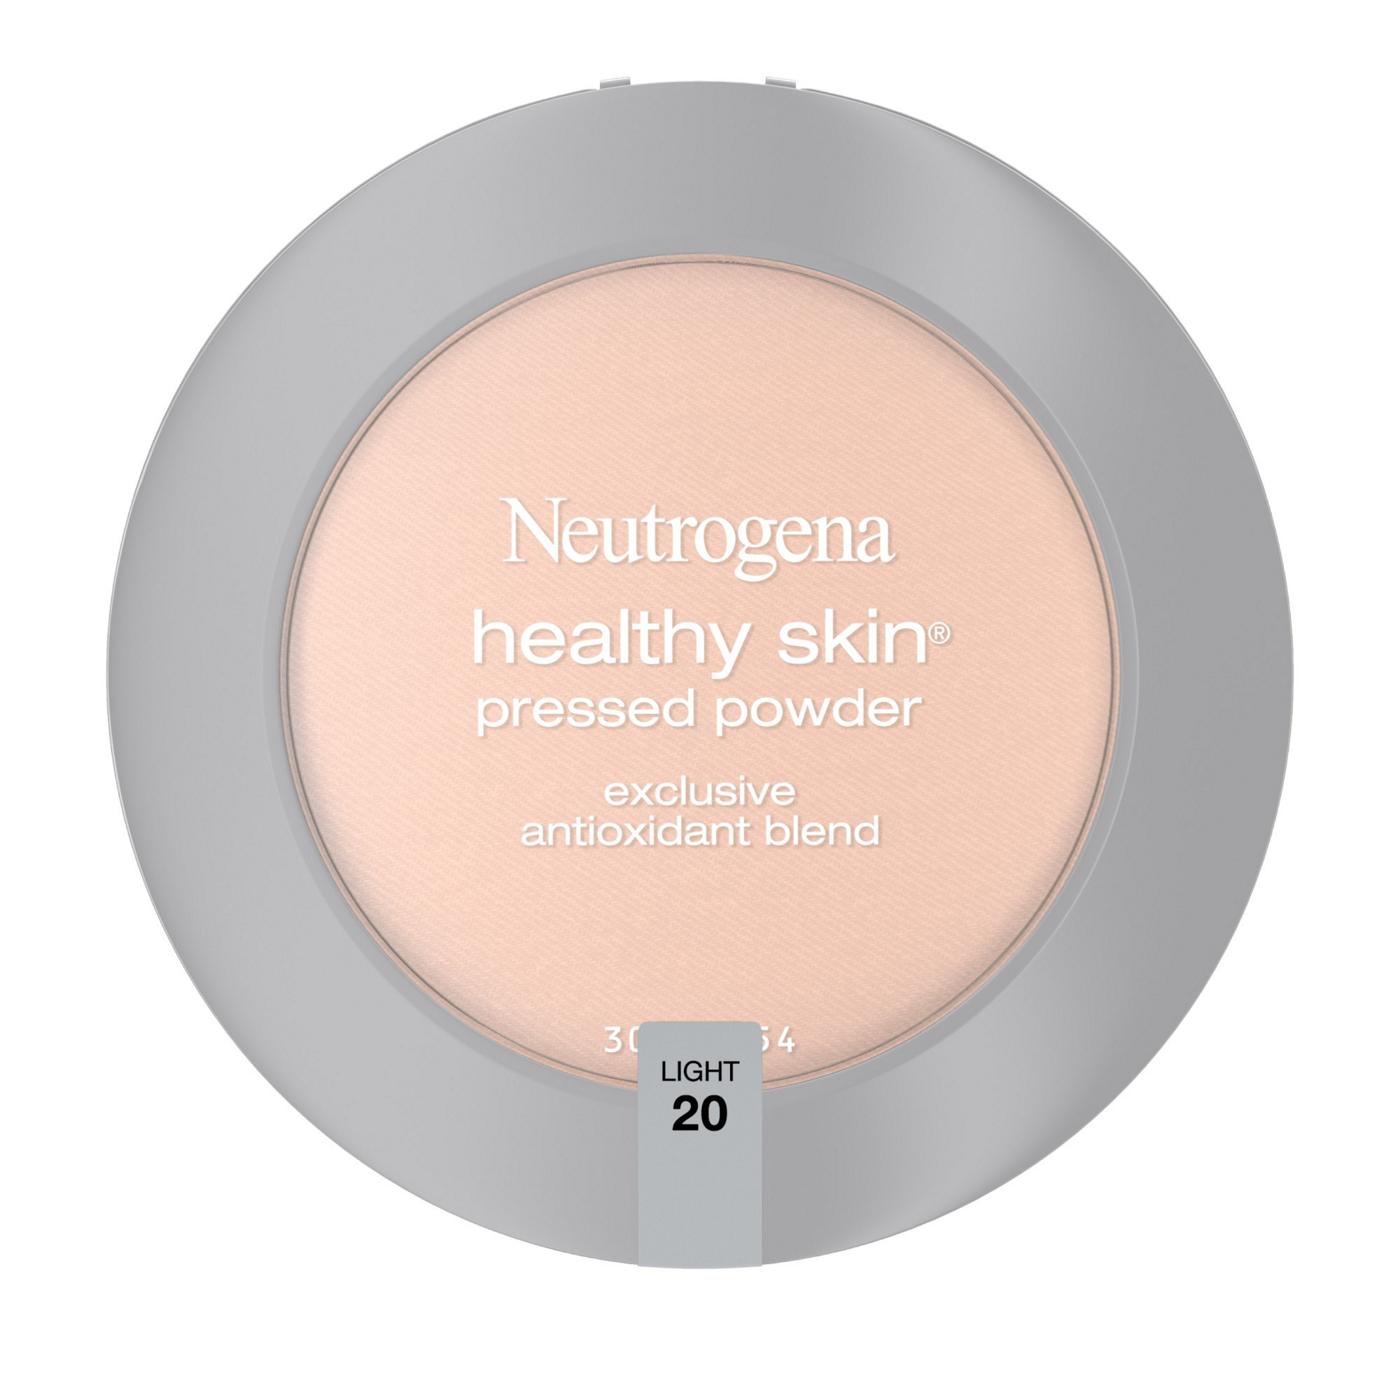 Neutrogena Healthy Skin Pressed Powder 20 Light; image 1 of 5